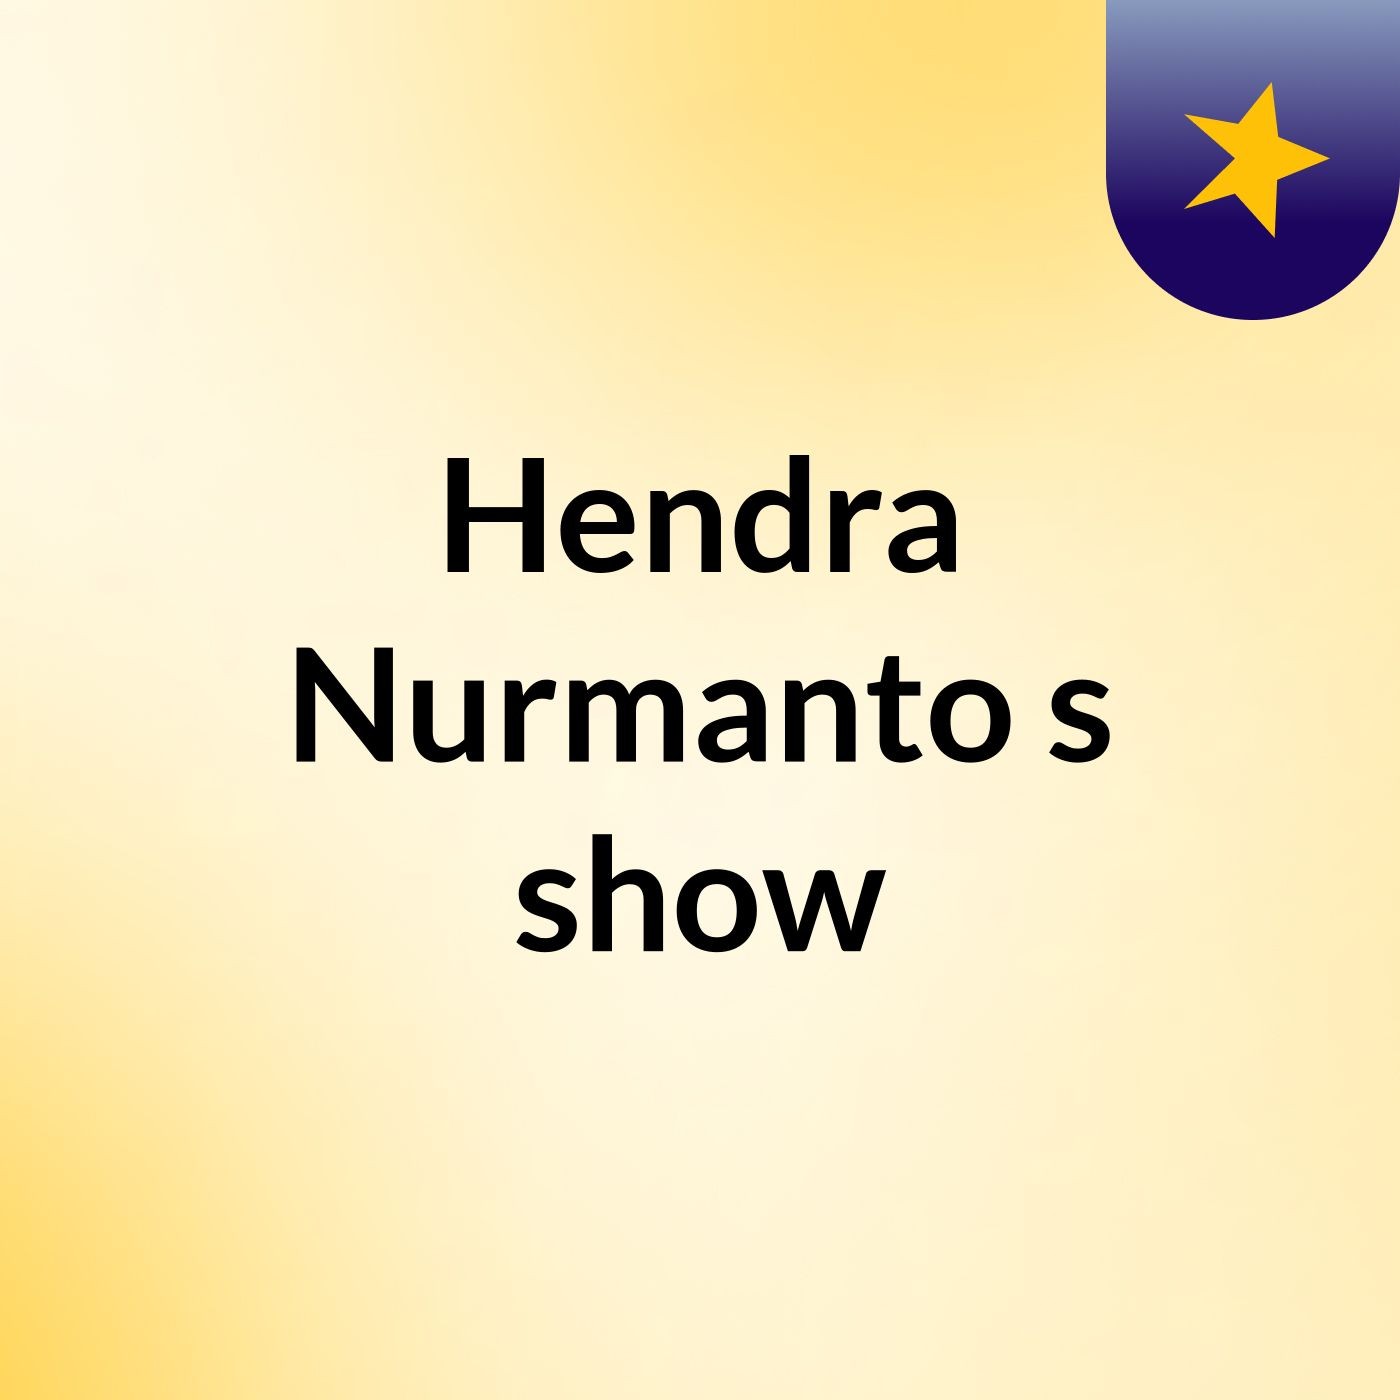 Hendra Nurmanto's show